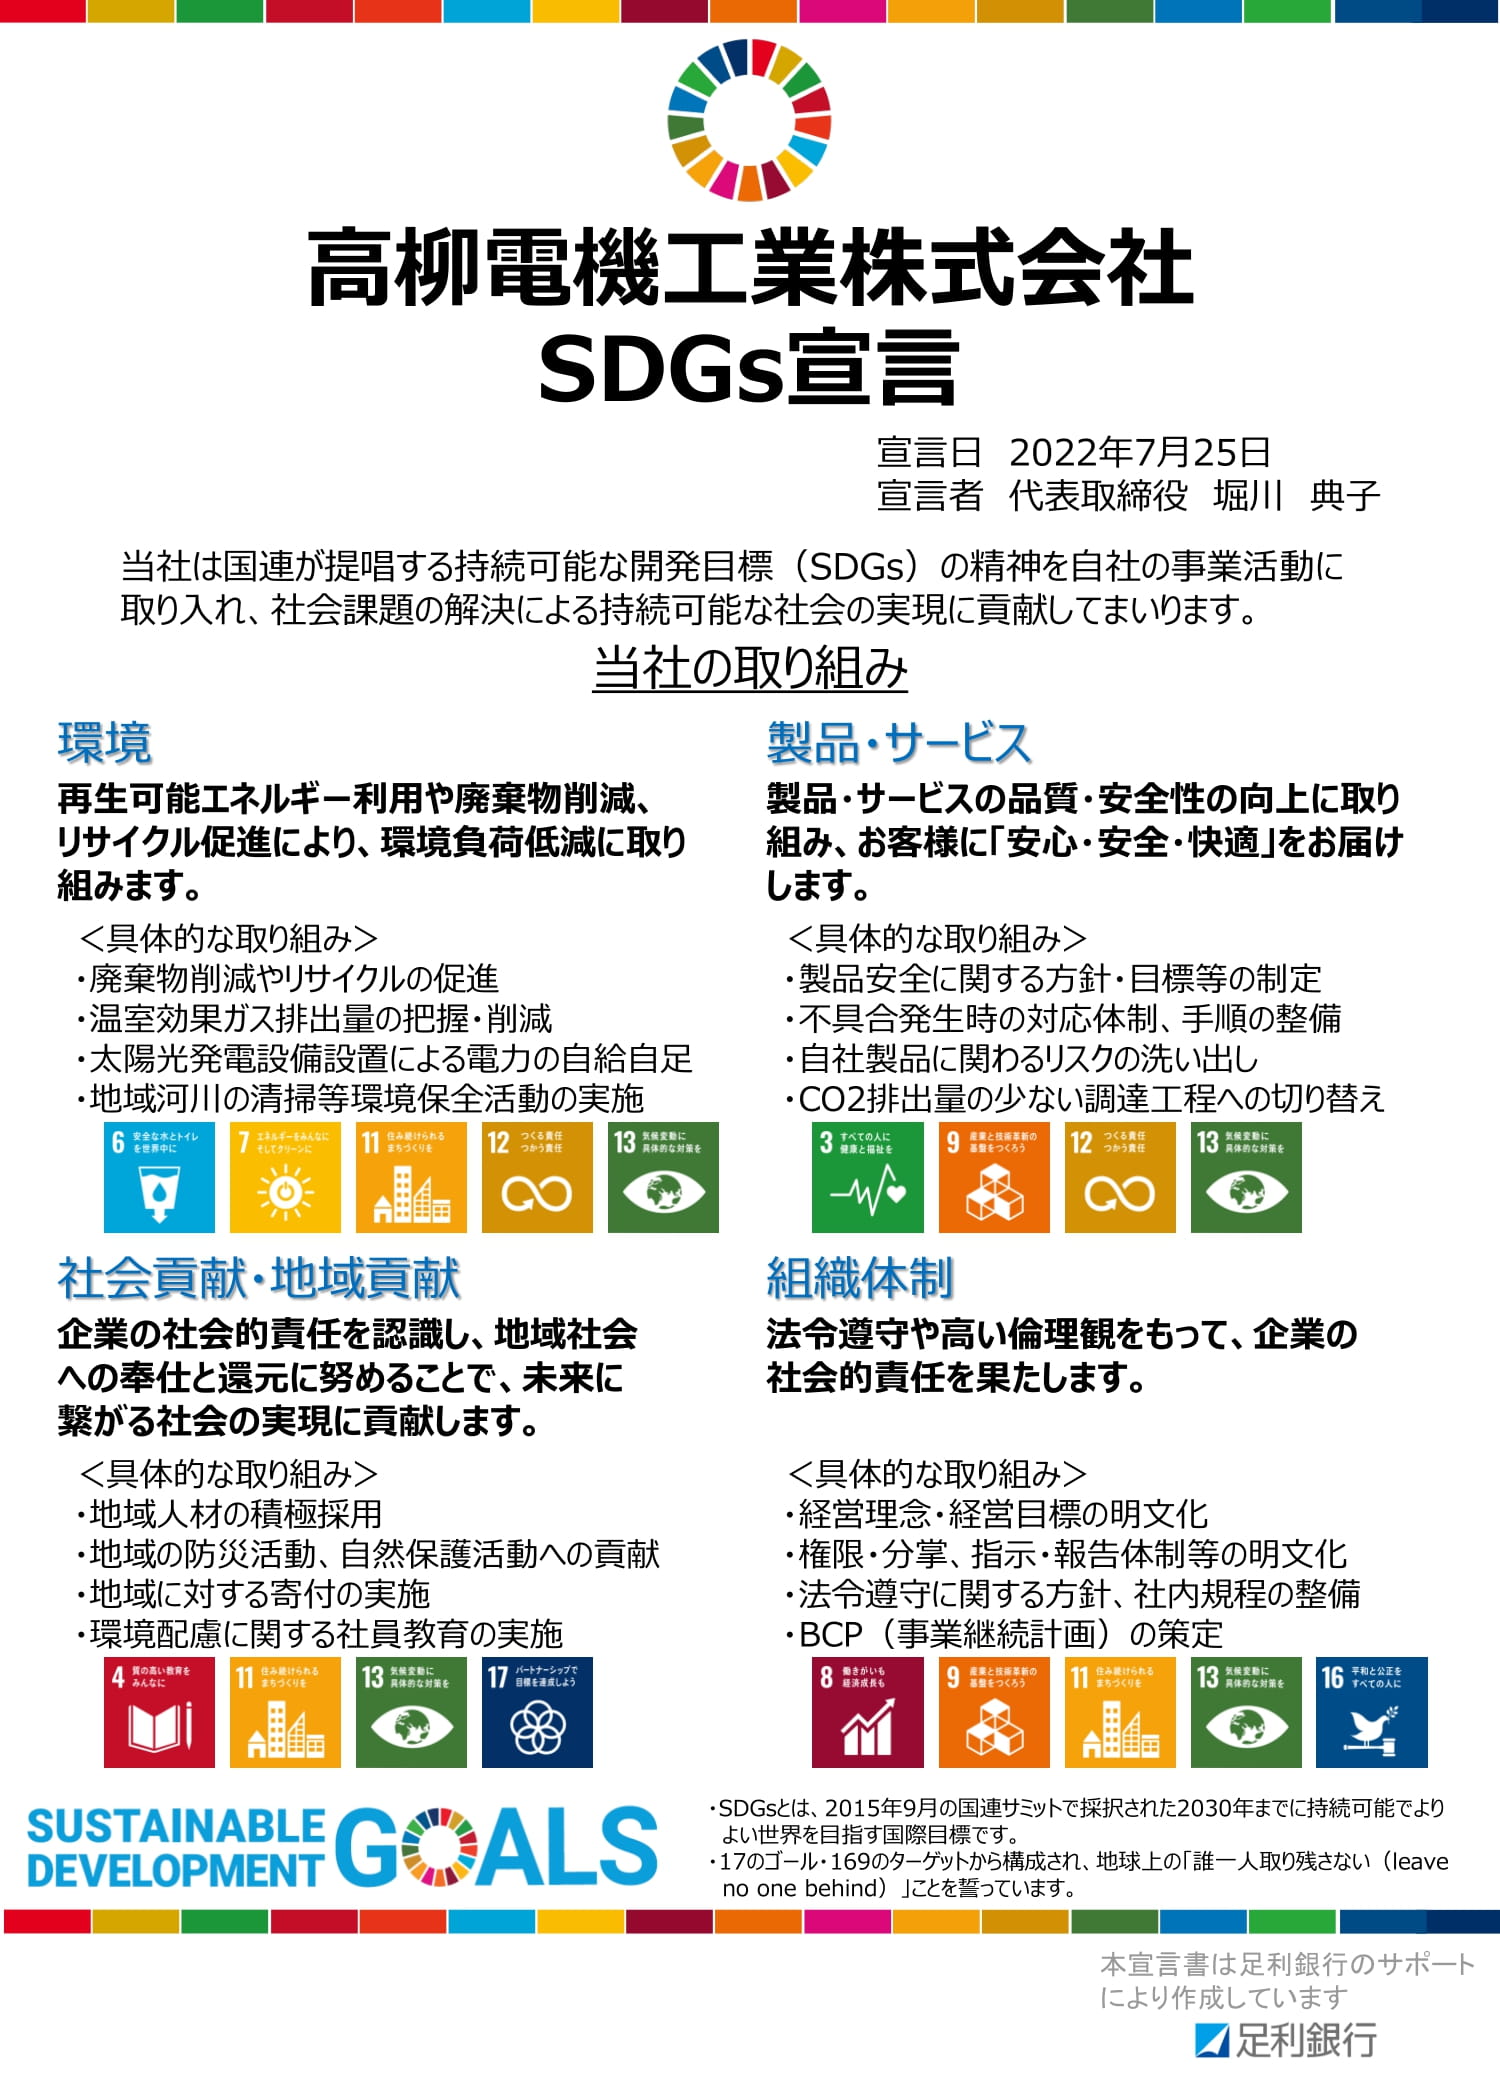 SDGs宣言「当社は国連が提唱する持続可能な開発目標の精神を自社の事業活動に取り入れ、社会課題の解決による持続可能な社会の実現に貢献してまいります。」